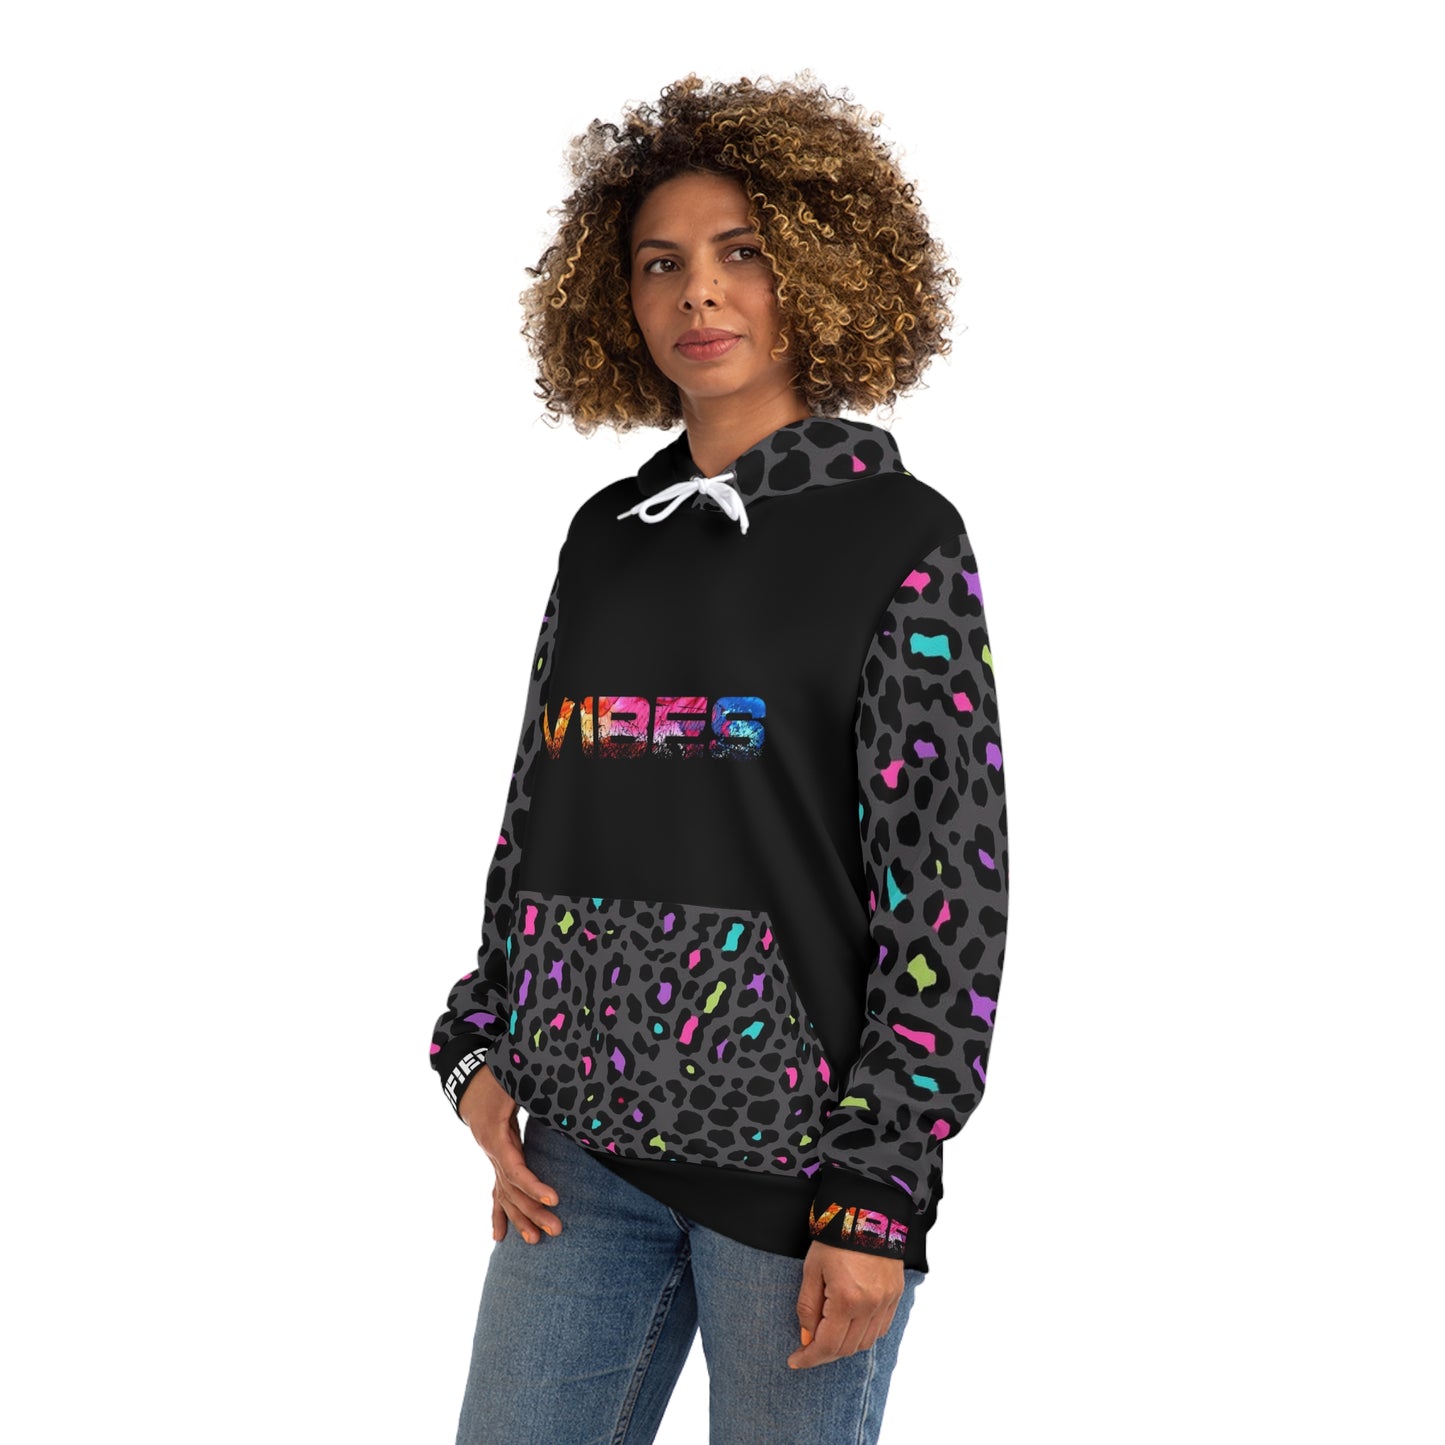 Women’s “Music Vibe” Leopard Fashion Hoodie